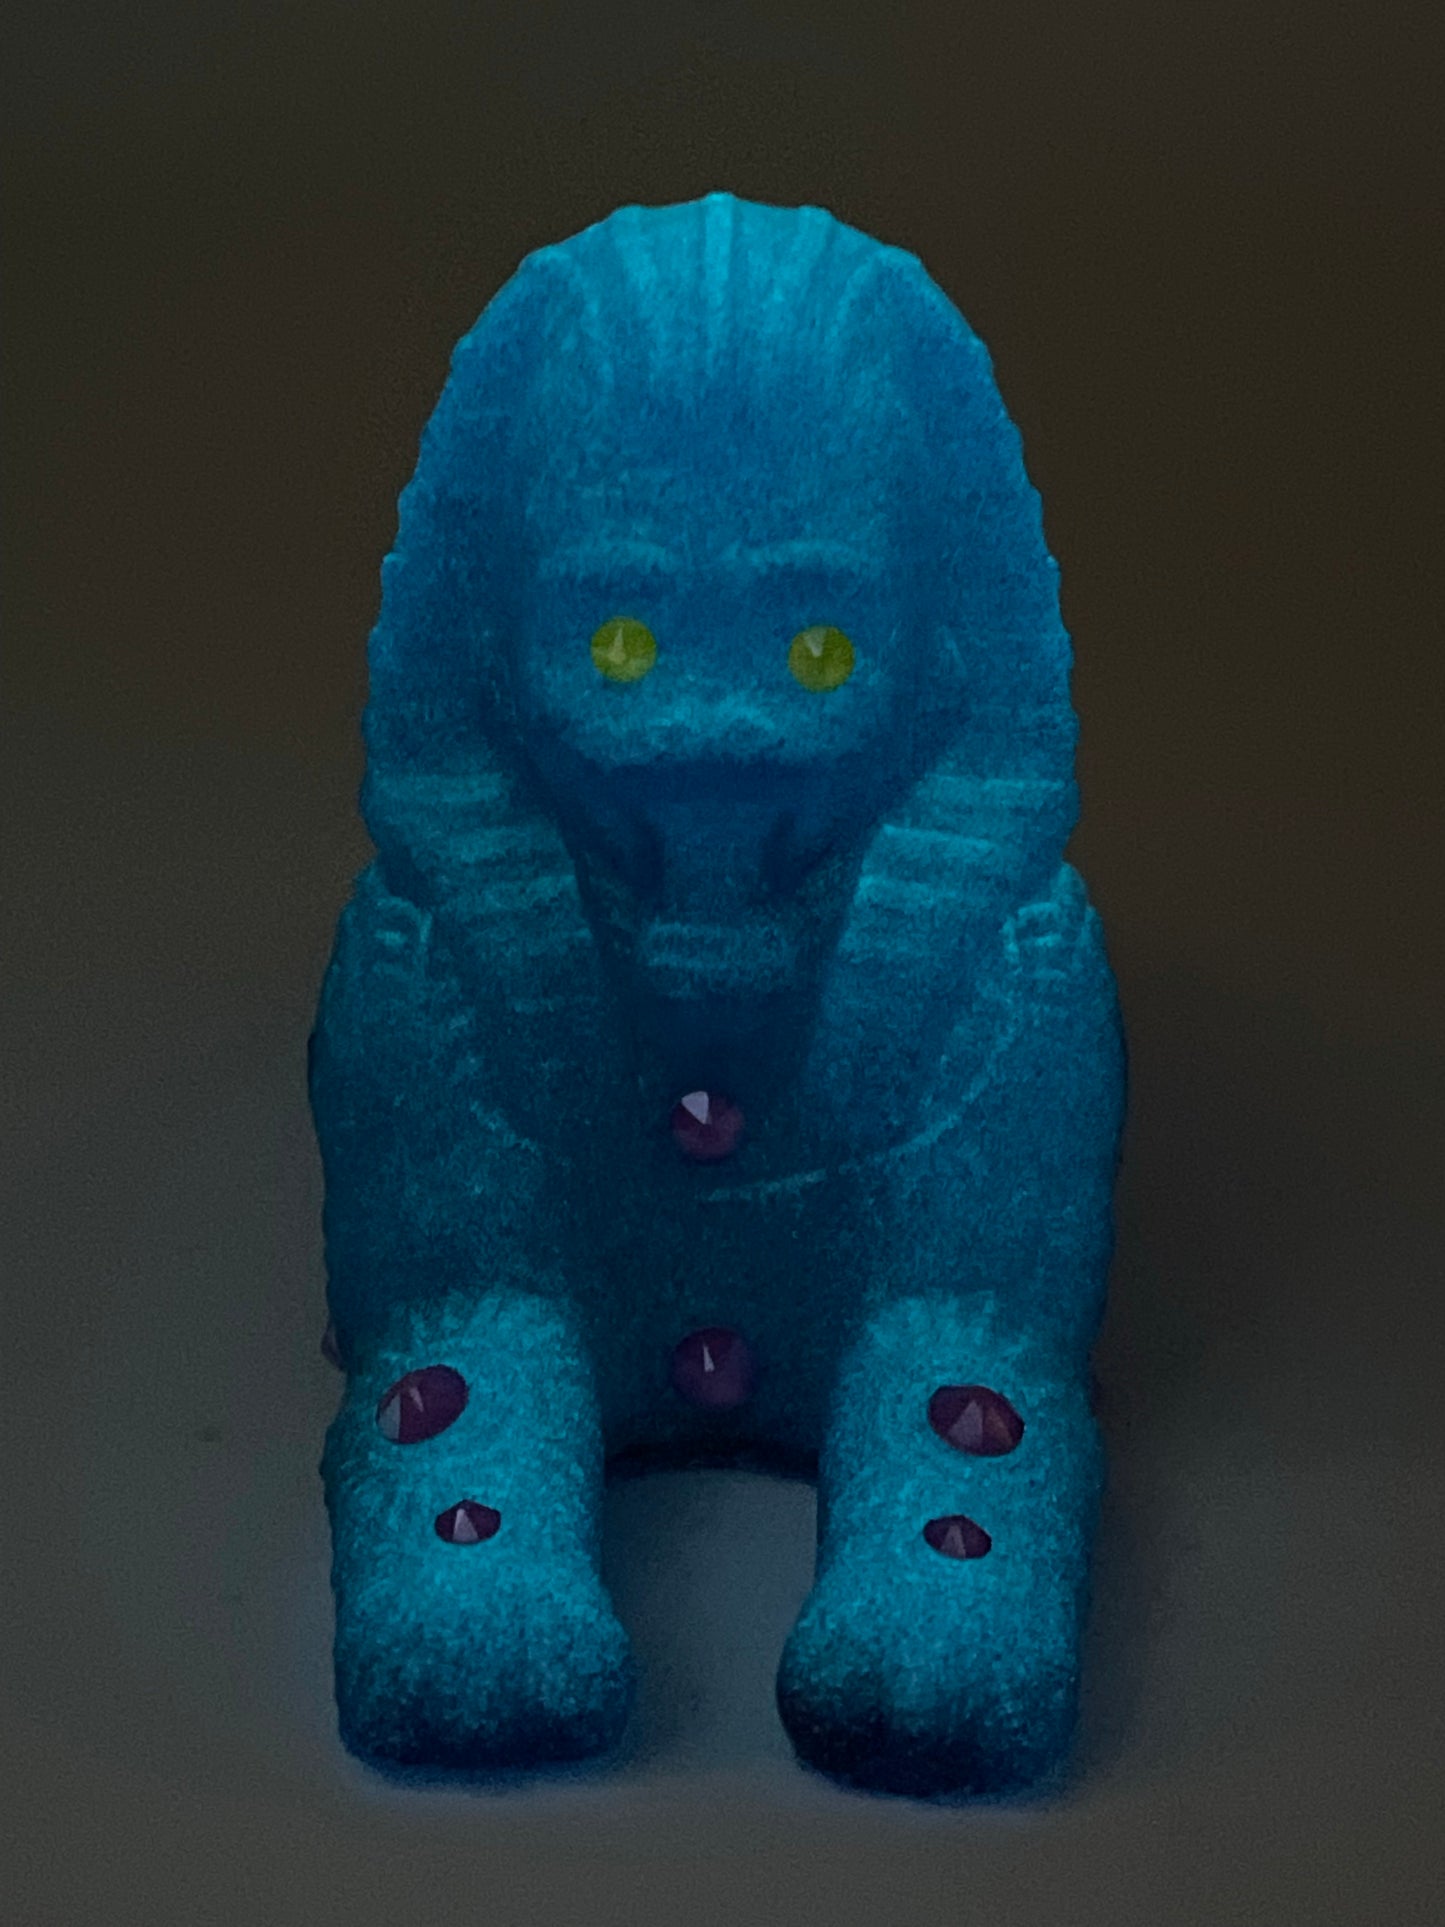 Sphinx Ape: Purple Glow Altitude